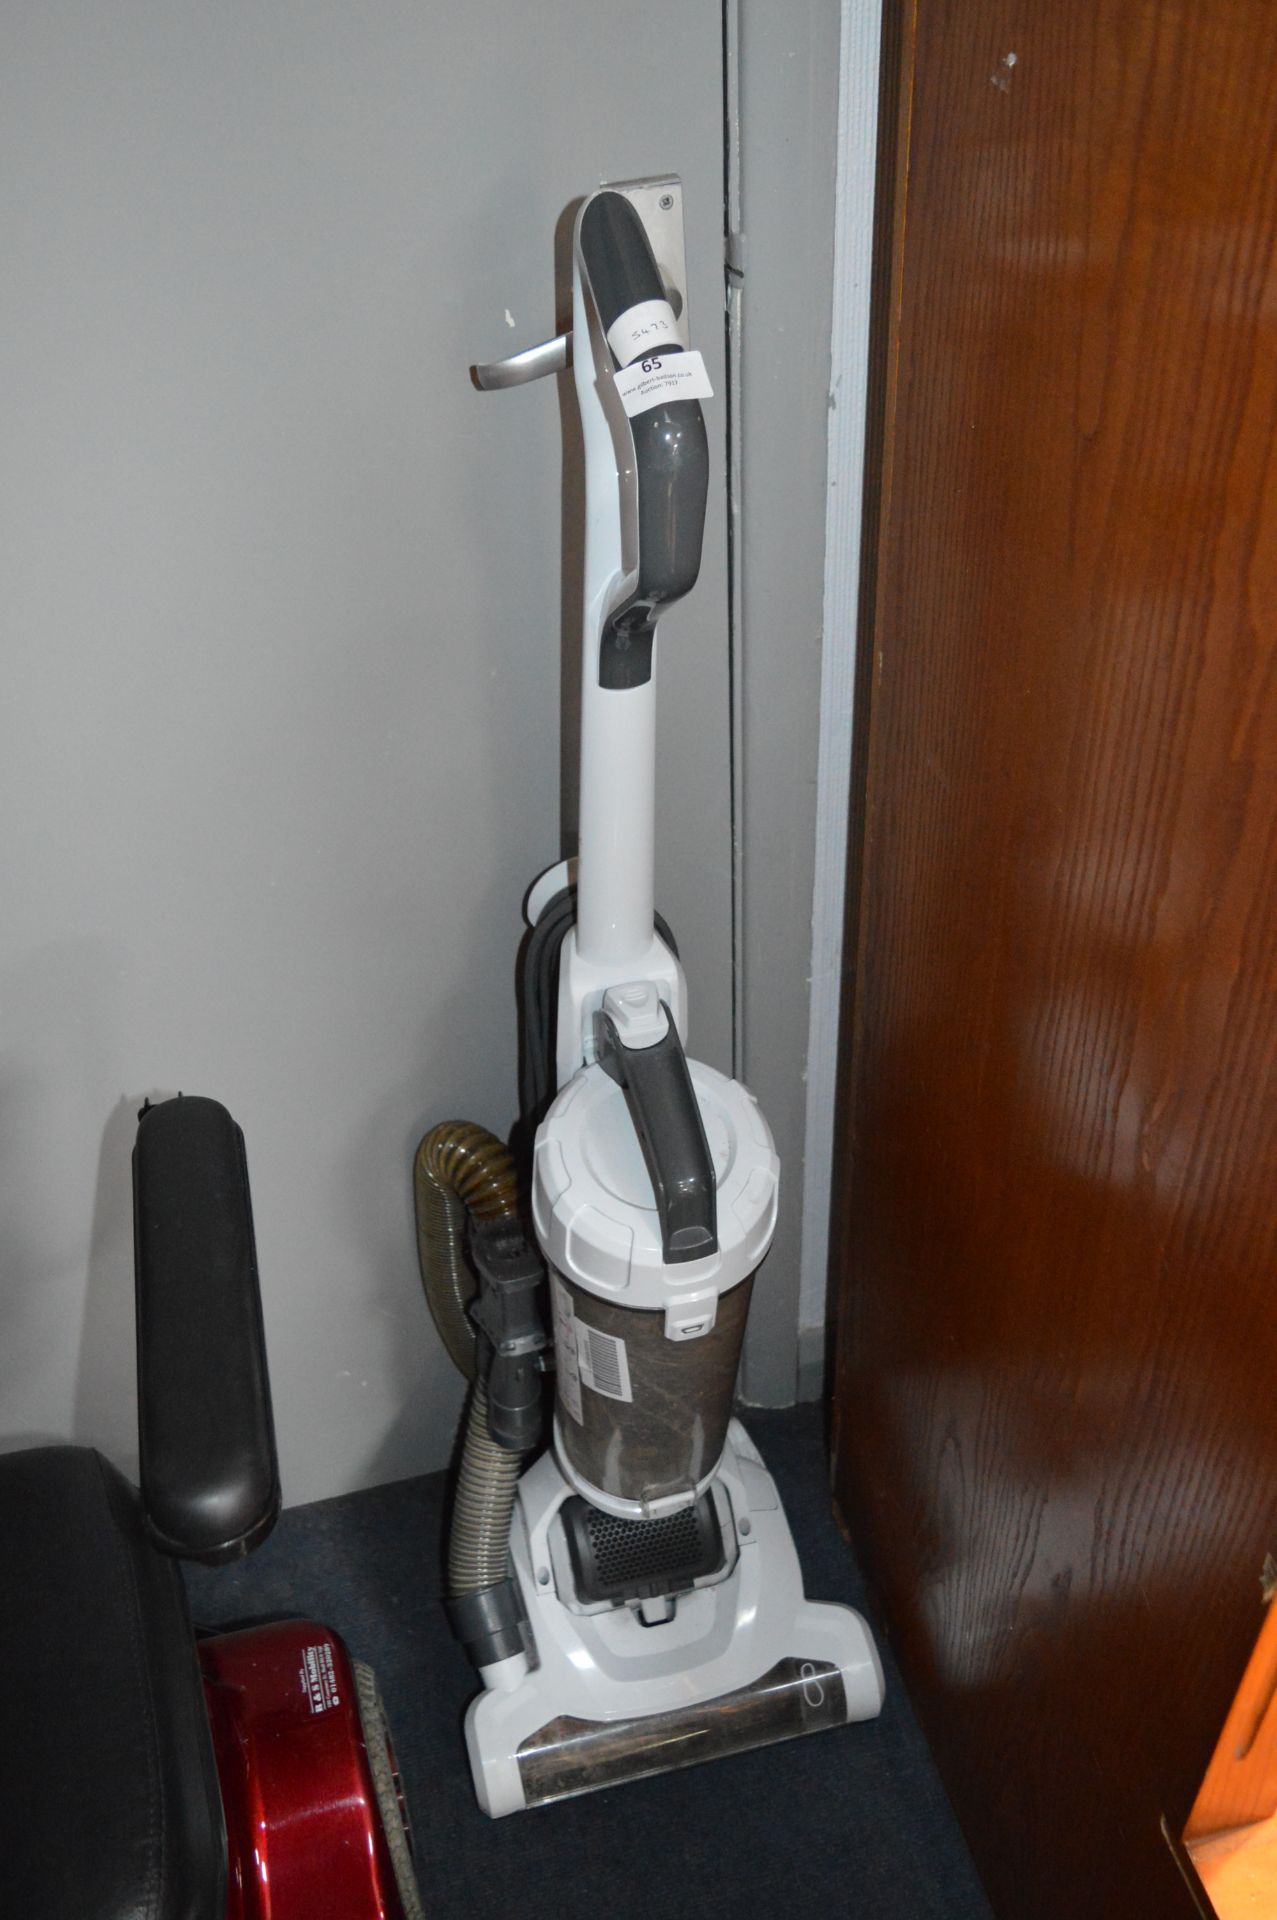 Bagless Upright Vacuum Cleaner